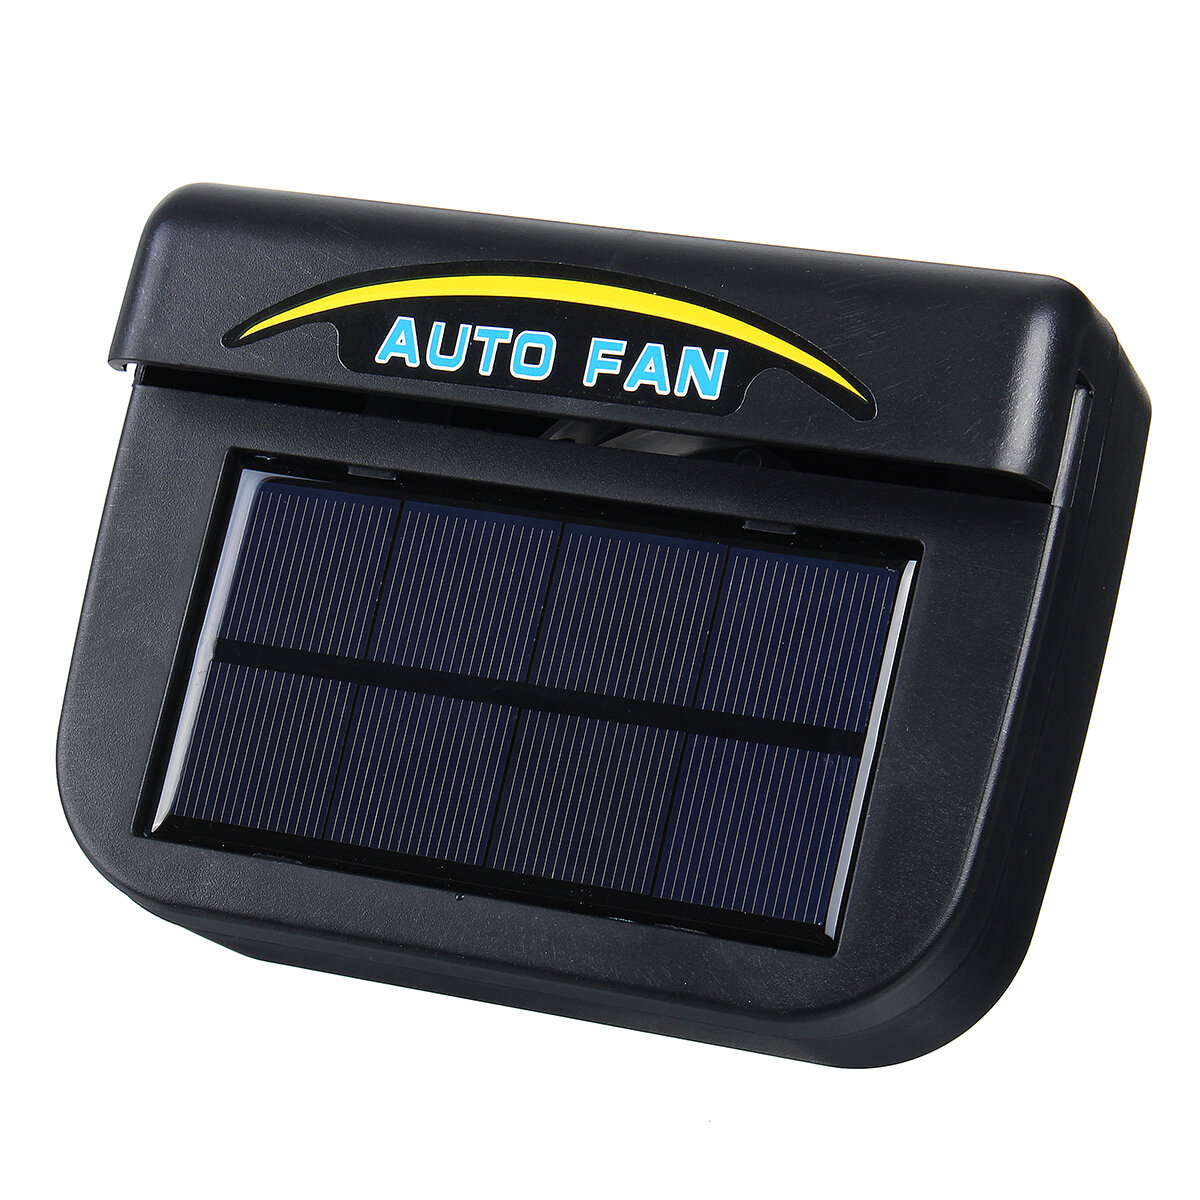 Solar power portable mini air conditioner car auto air vent cool fan conditioner